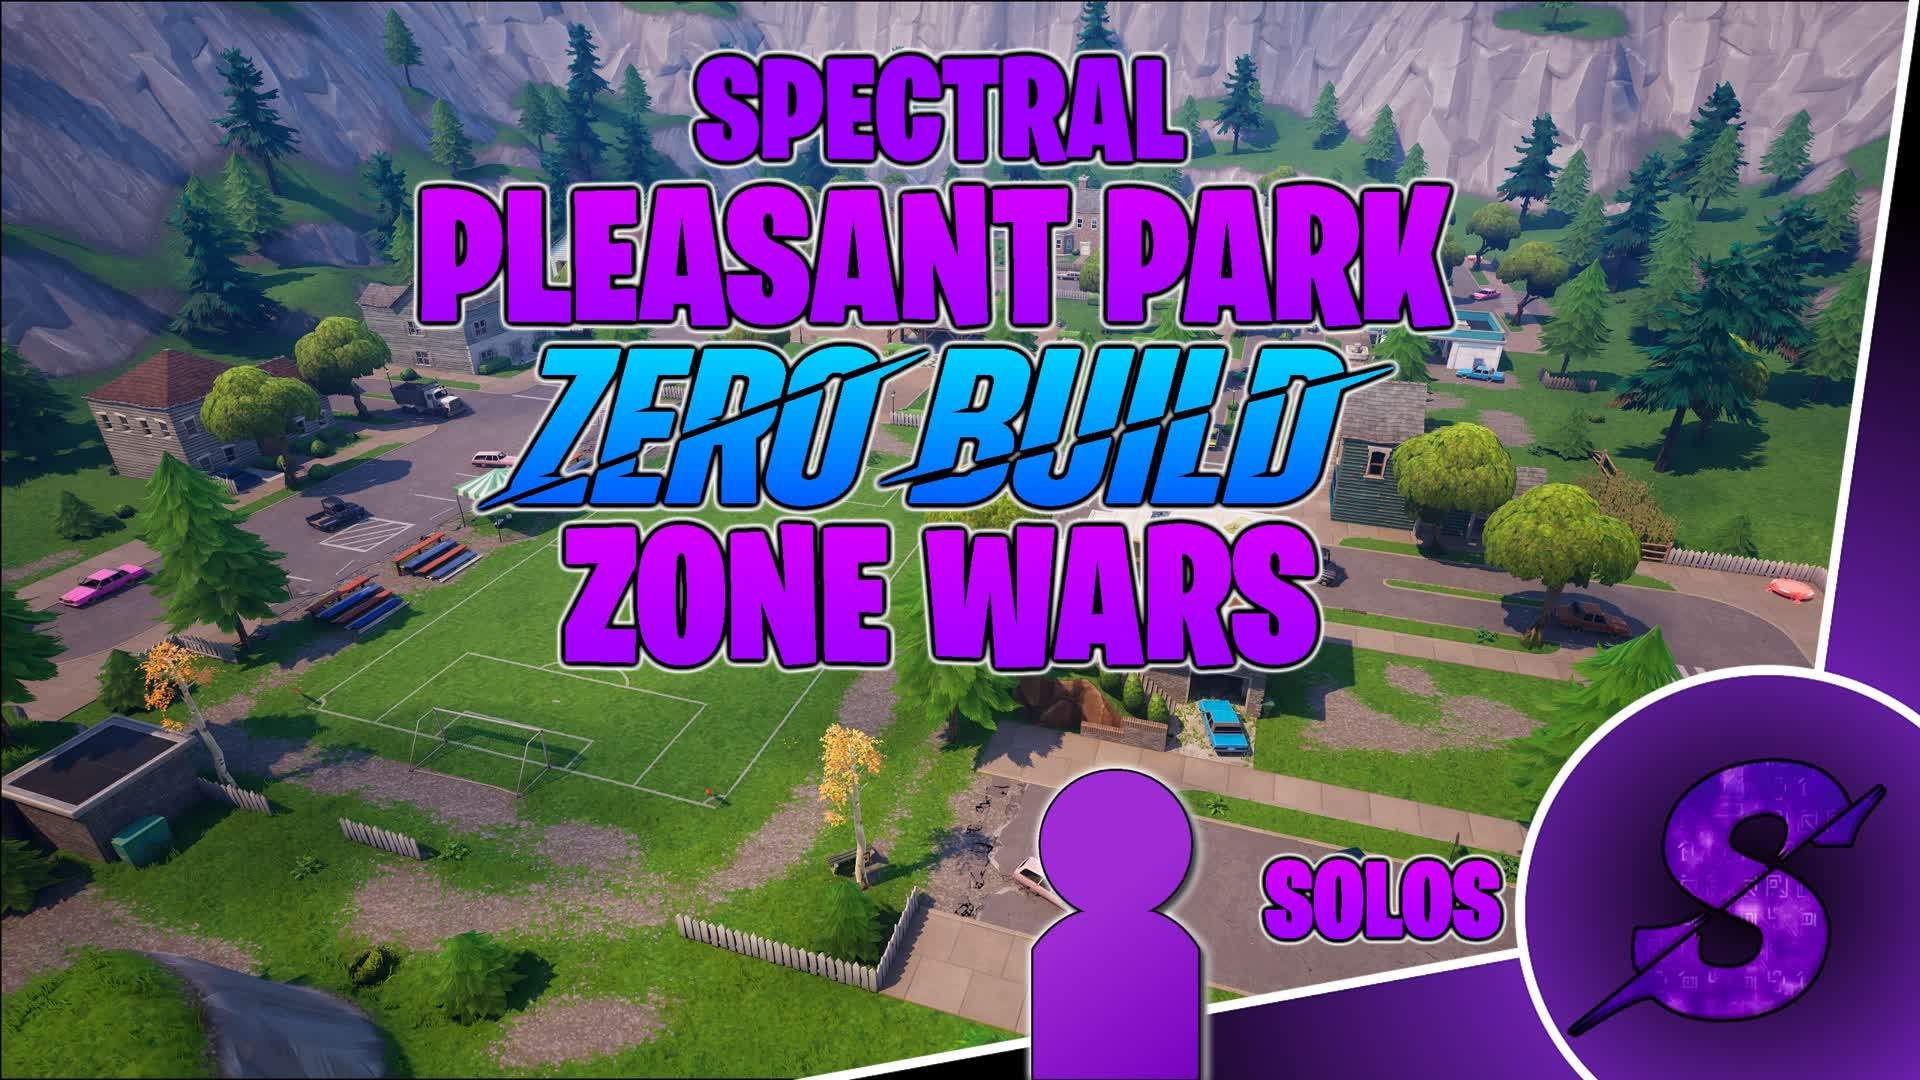 Pleasant Park Zero Build Zone Wars